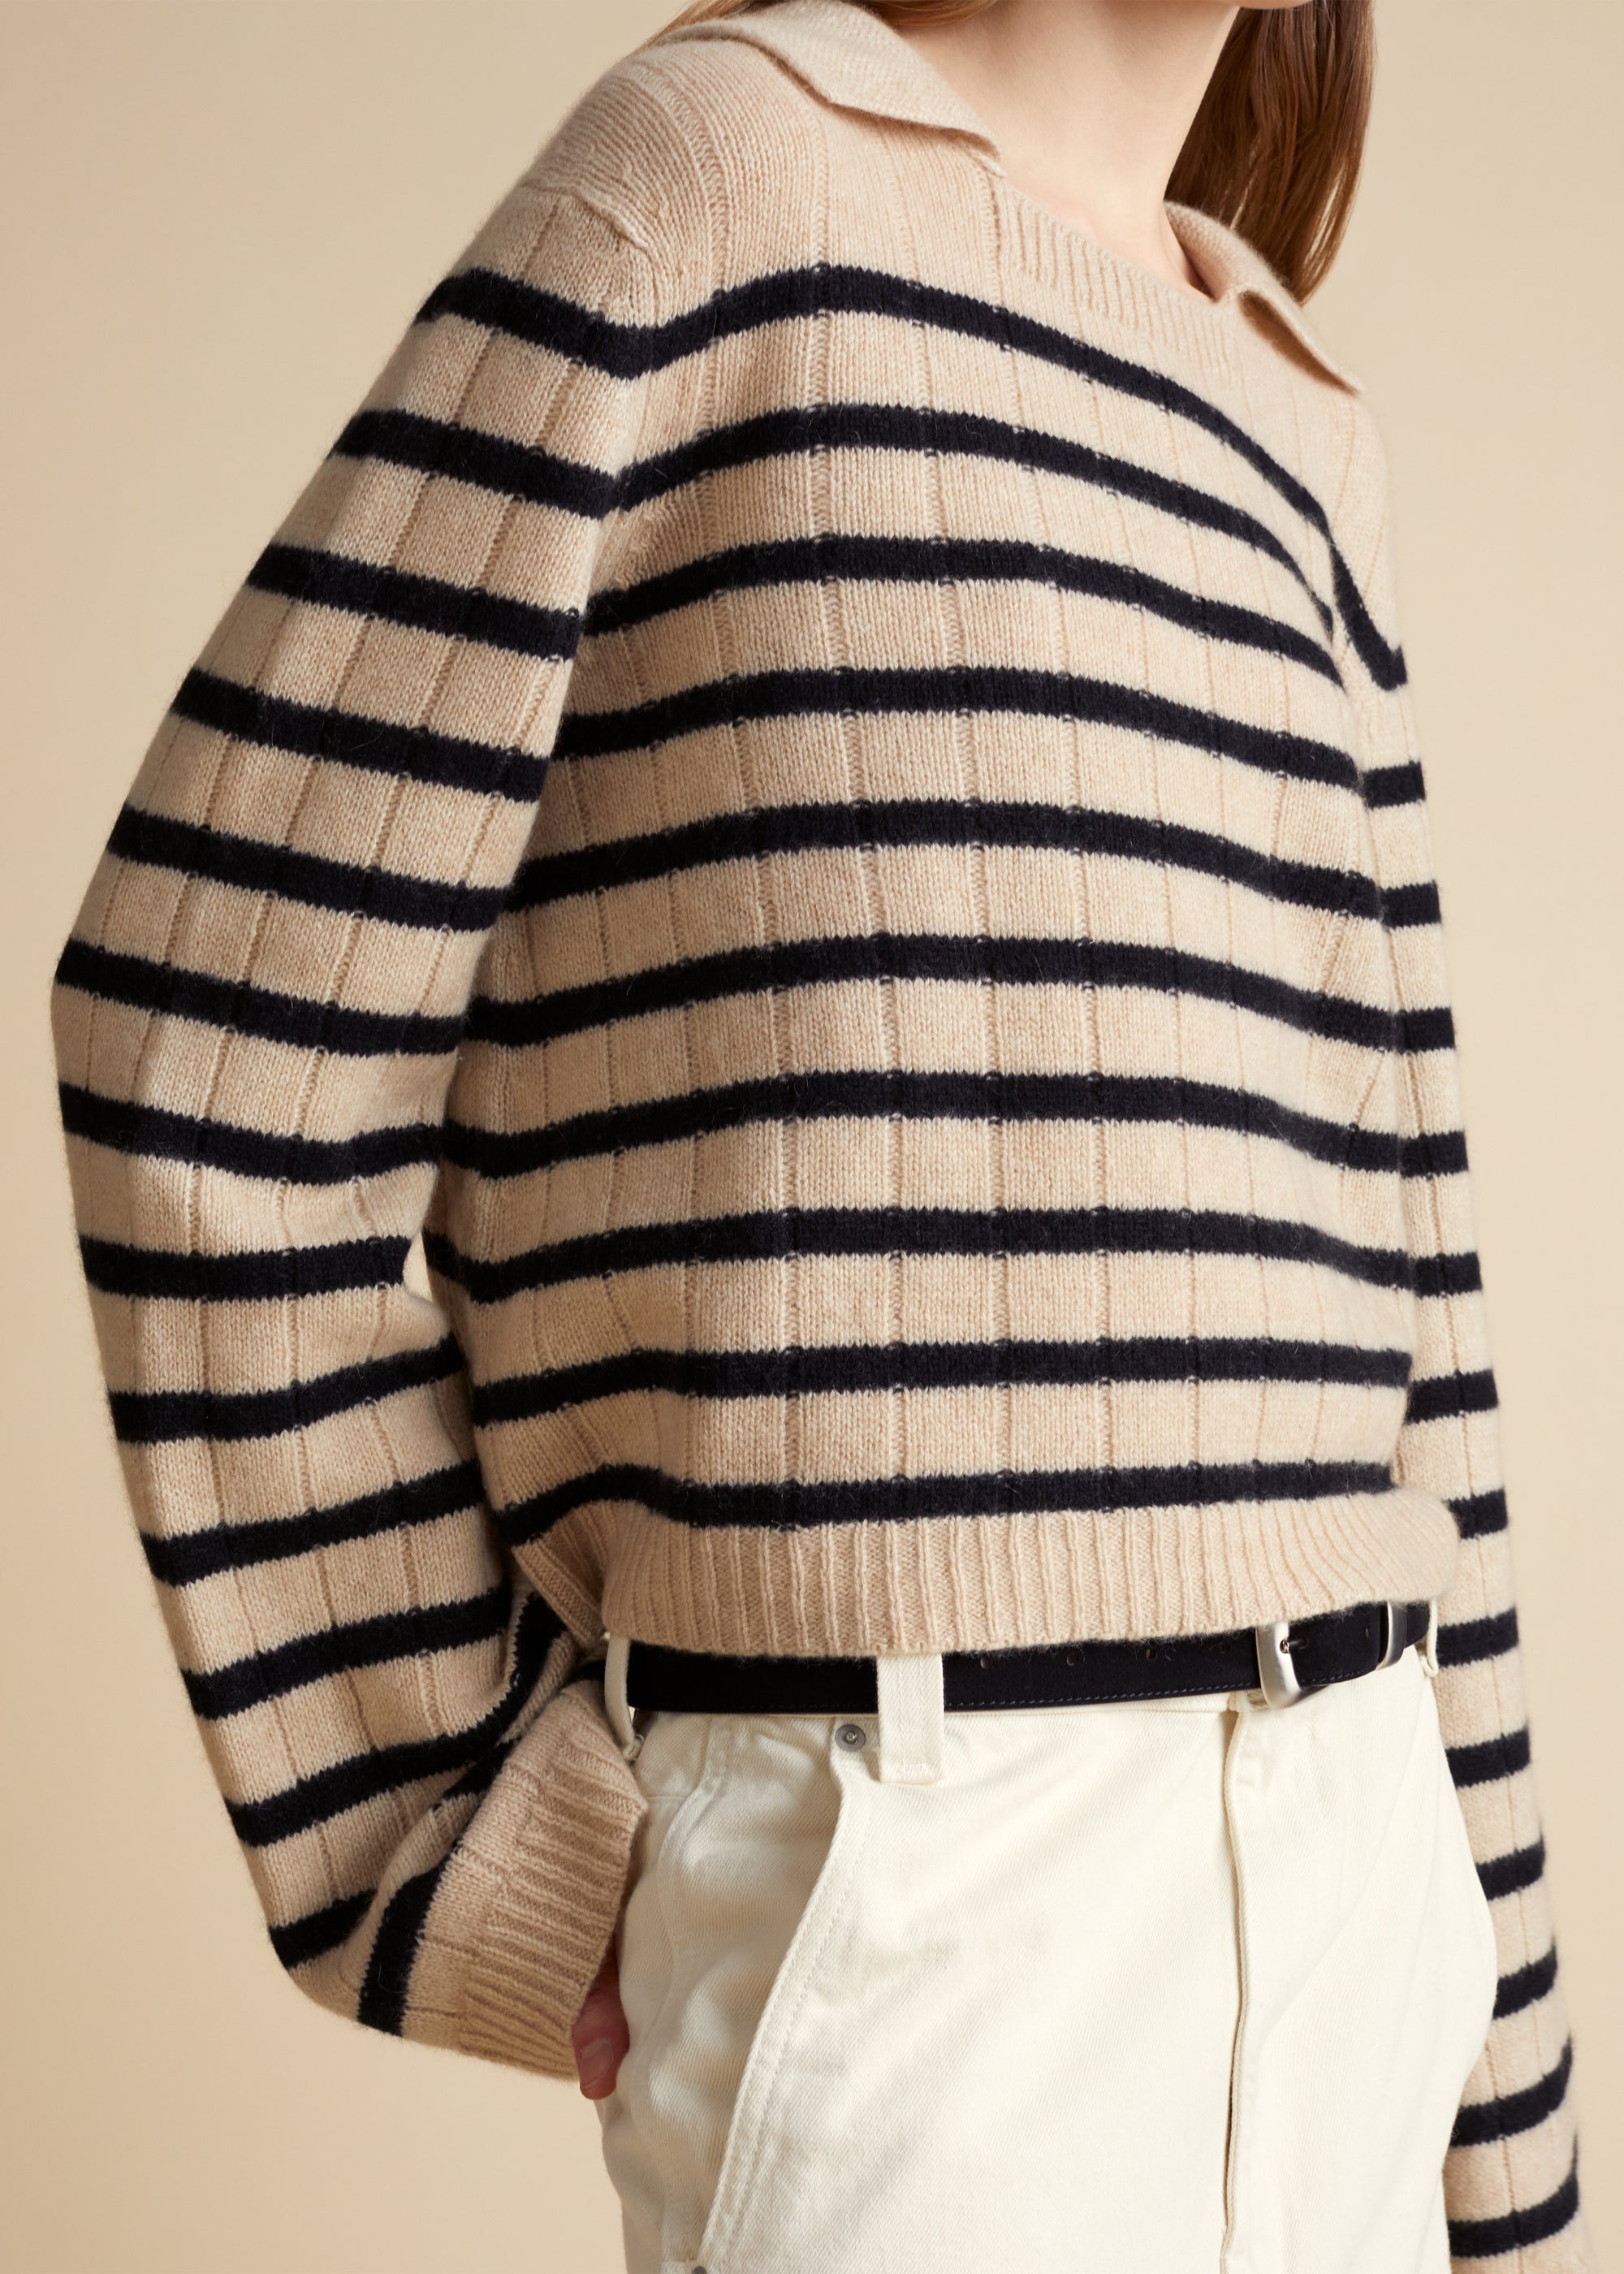 Mateo sweater in cashmere - Butter & Black Stripe